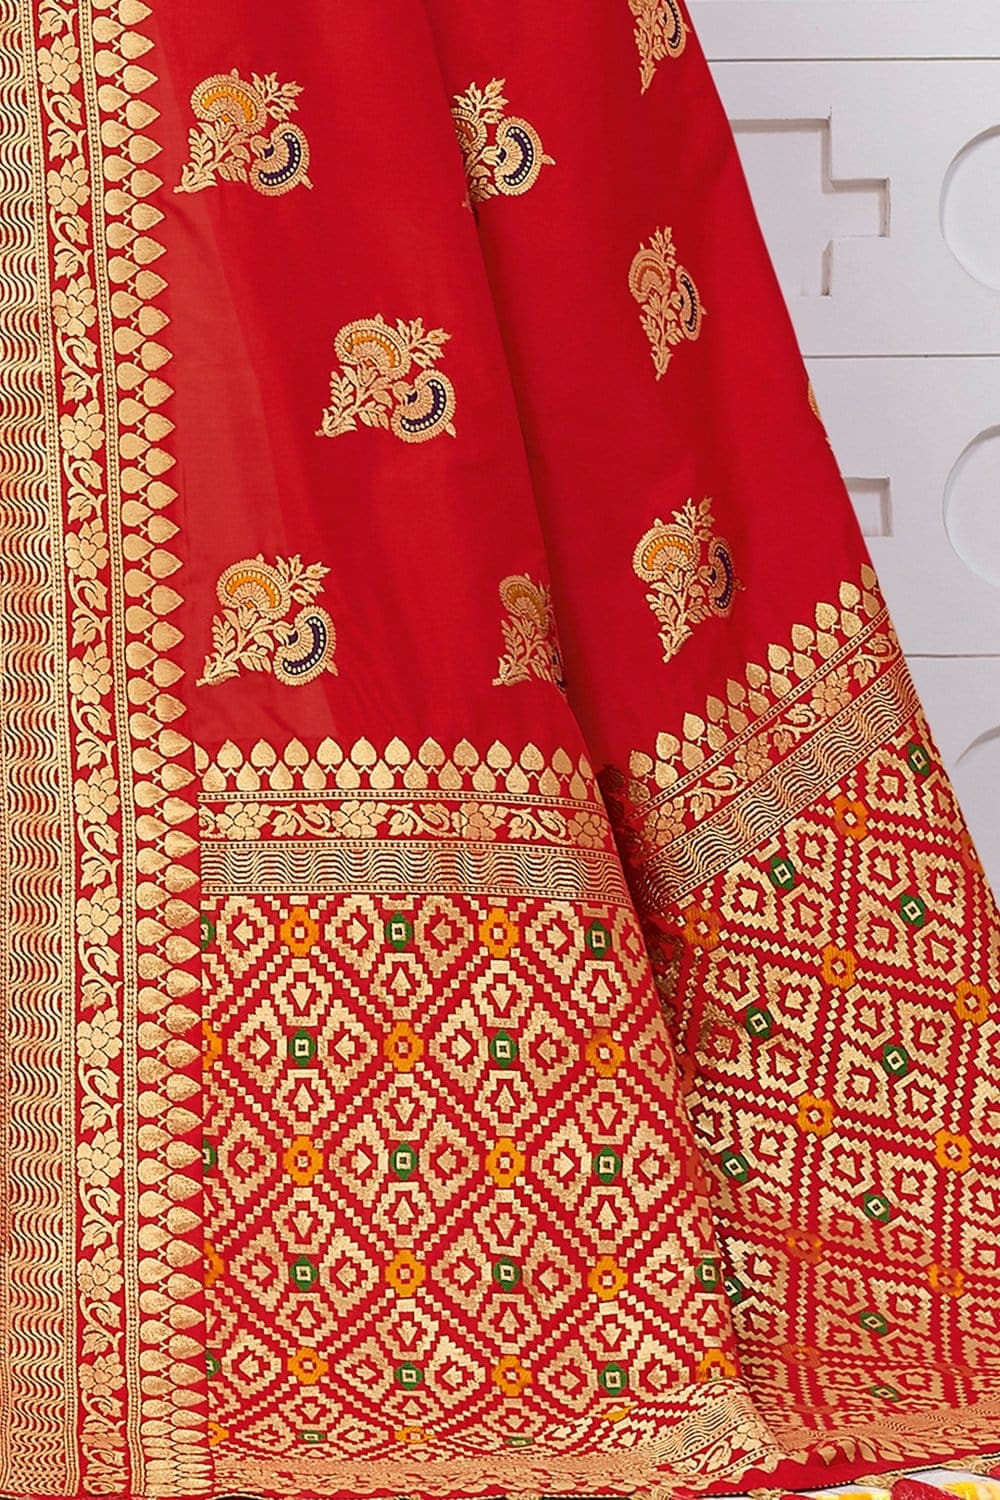 Beautiful ladybug red banarasi  saree - From Wedding sutra collection - Buy online on Karagiri - Free shipping to USA